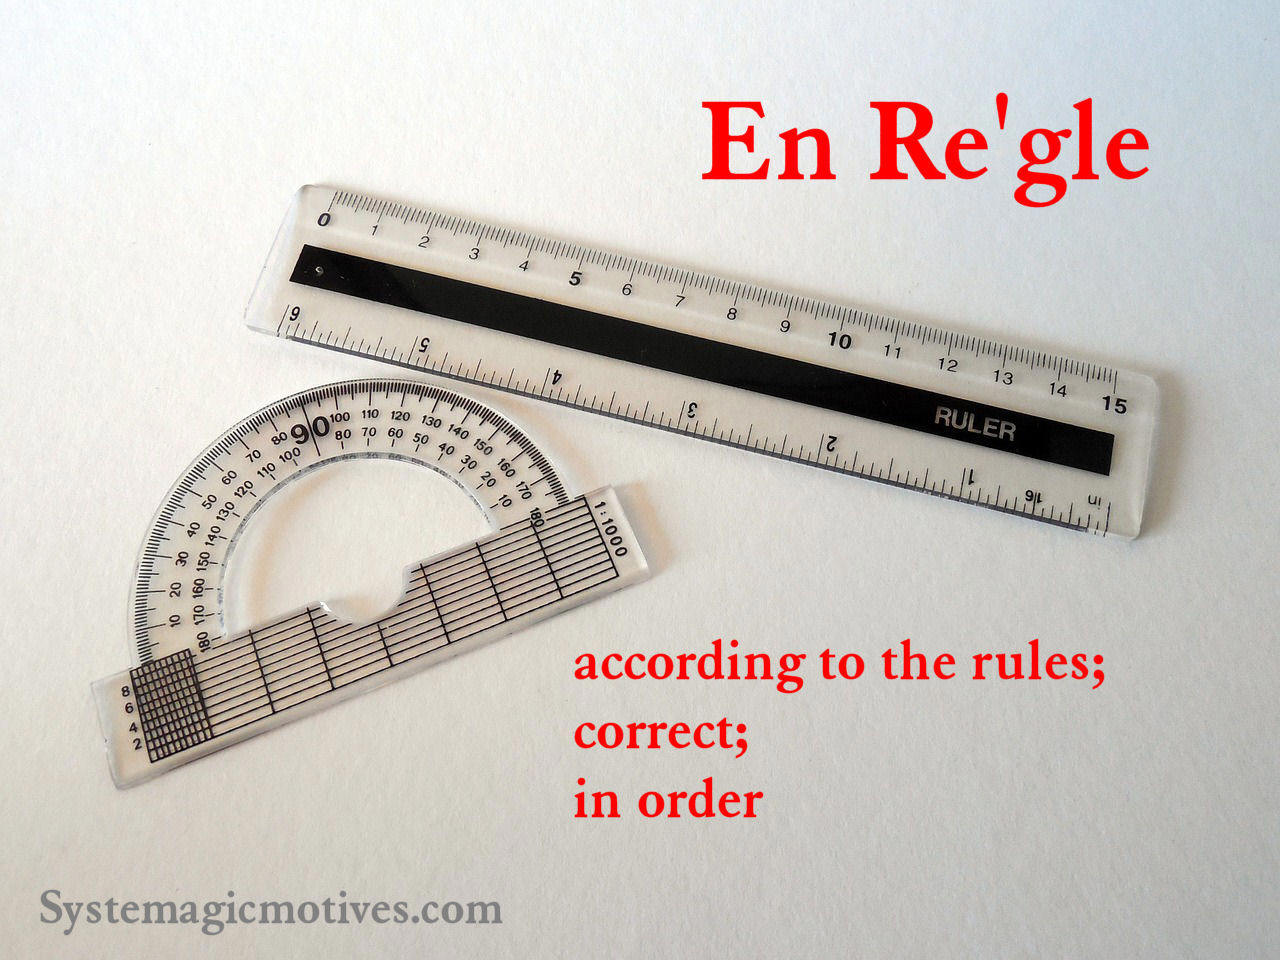 Graphic Definition of En Regle